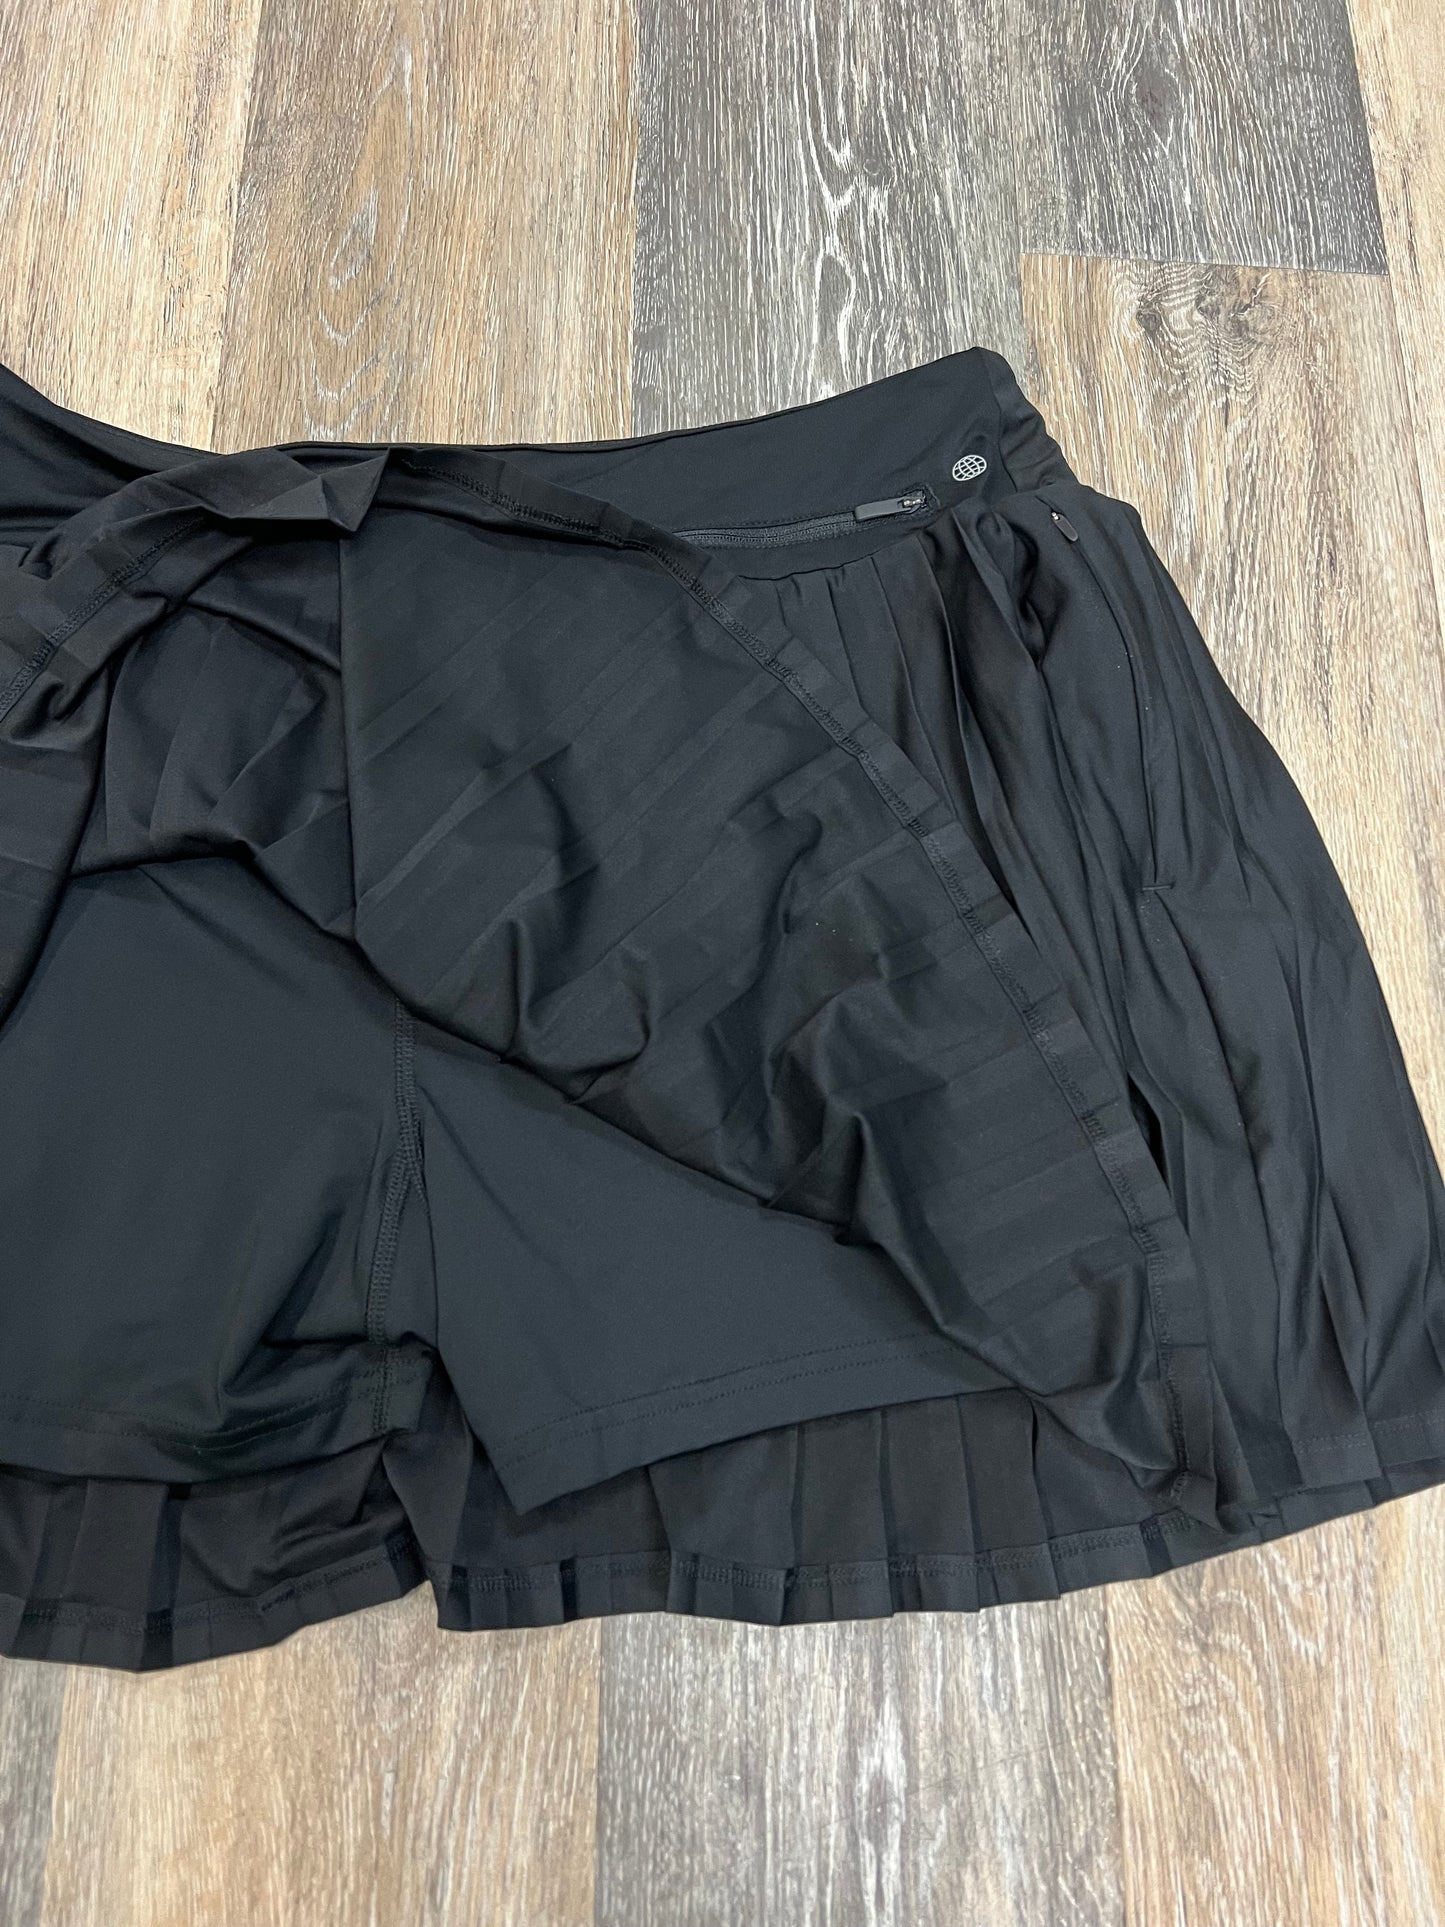 Black Athletic Skirt Adidas Golf, Size L